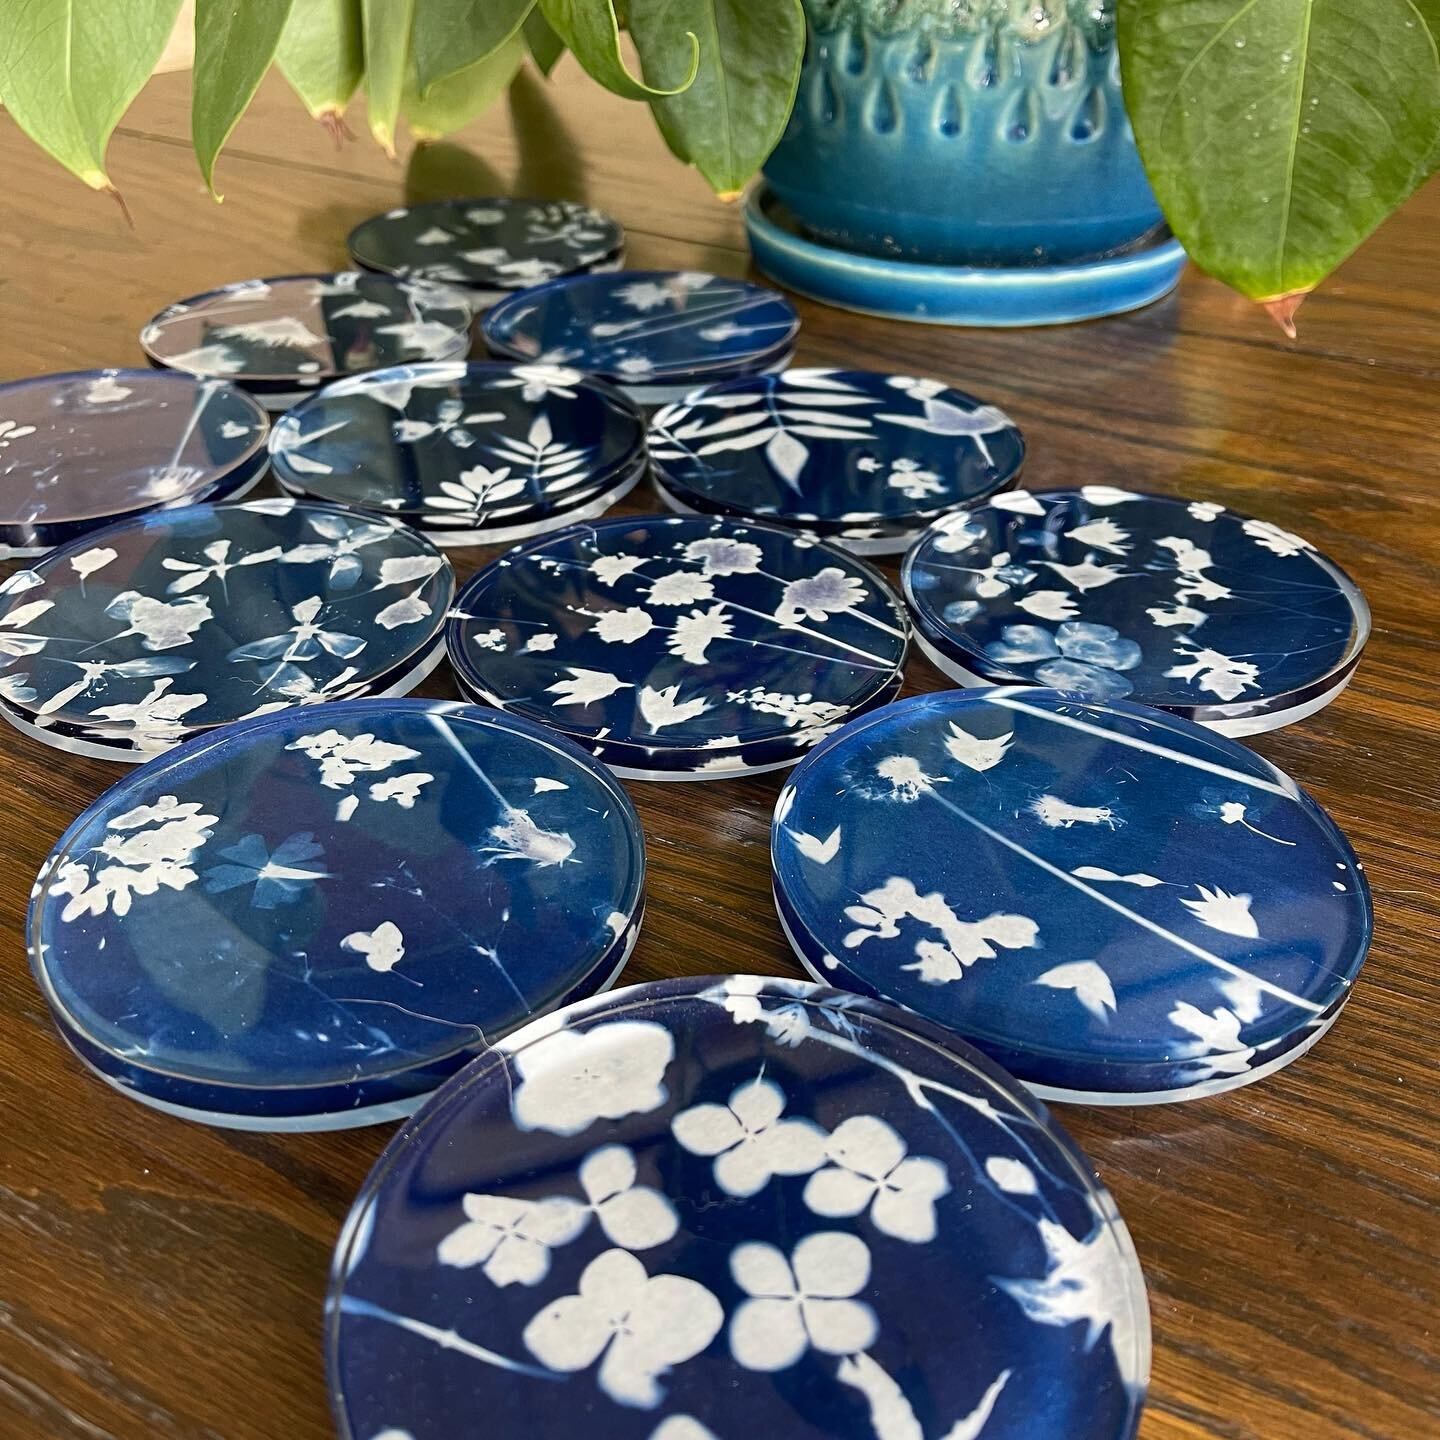 New coasters heading out next week. Find them at @jenniferwoodsjewelry @dnagalleries and my online shop (link in bio). 
.
.
.

#photogram #printmaking #sunprint #jacquardcyanotype #cyanotype #blueandwhite #botanicalart #flowers #floralart #okc #okcar